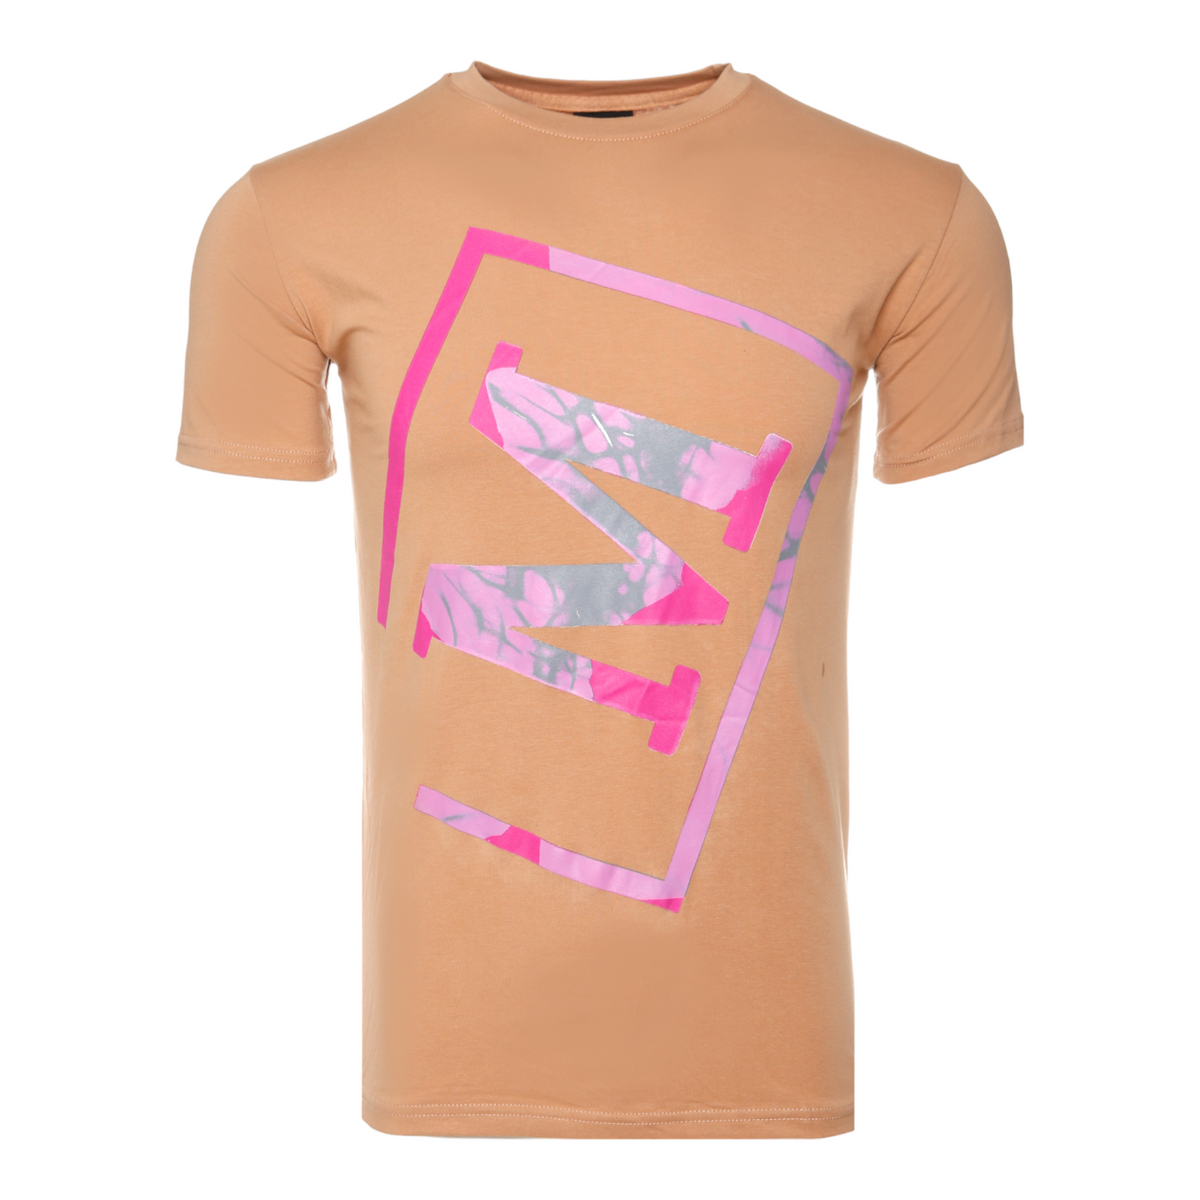 MDB Brand Men's Flame T-Shirt - Pink Flame